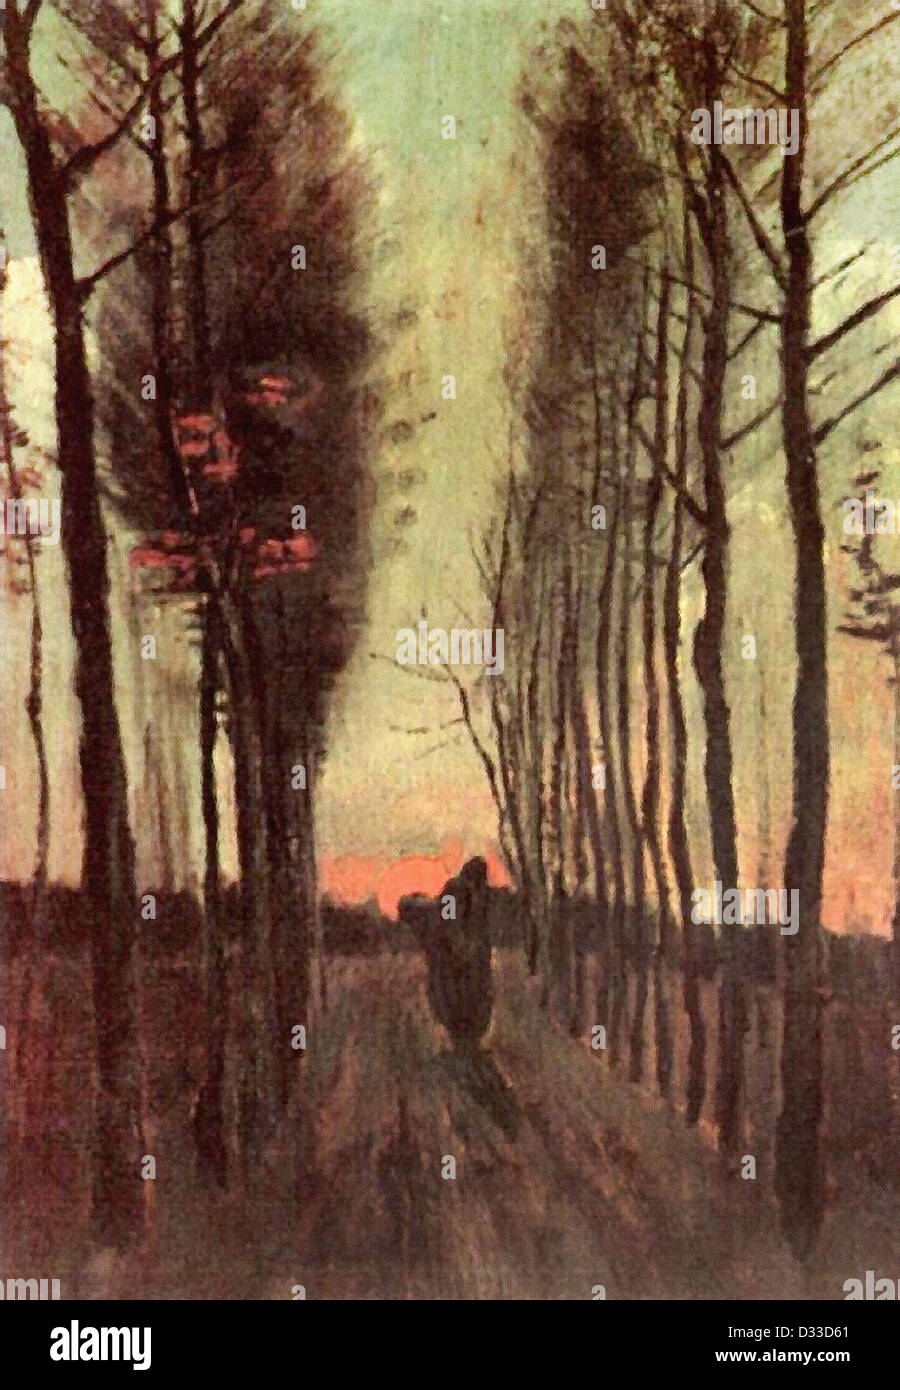 Vincent van Gogh : Avenue di pioppi al tramonto. 1884. Olio su tela. Rijksmuseum Kröller-Müller, Otterlo, Paesi Bassi. Realismo. Foto Stock